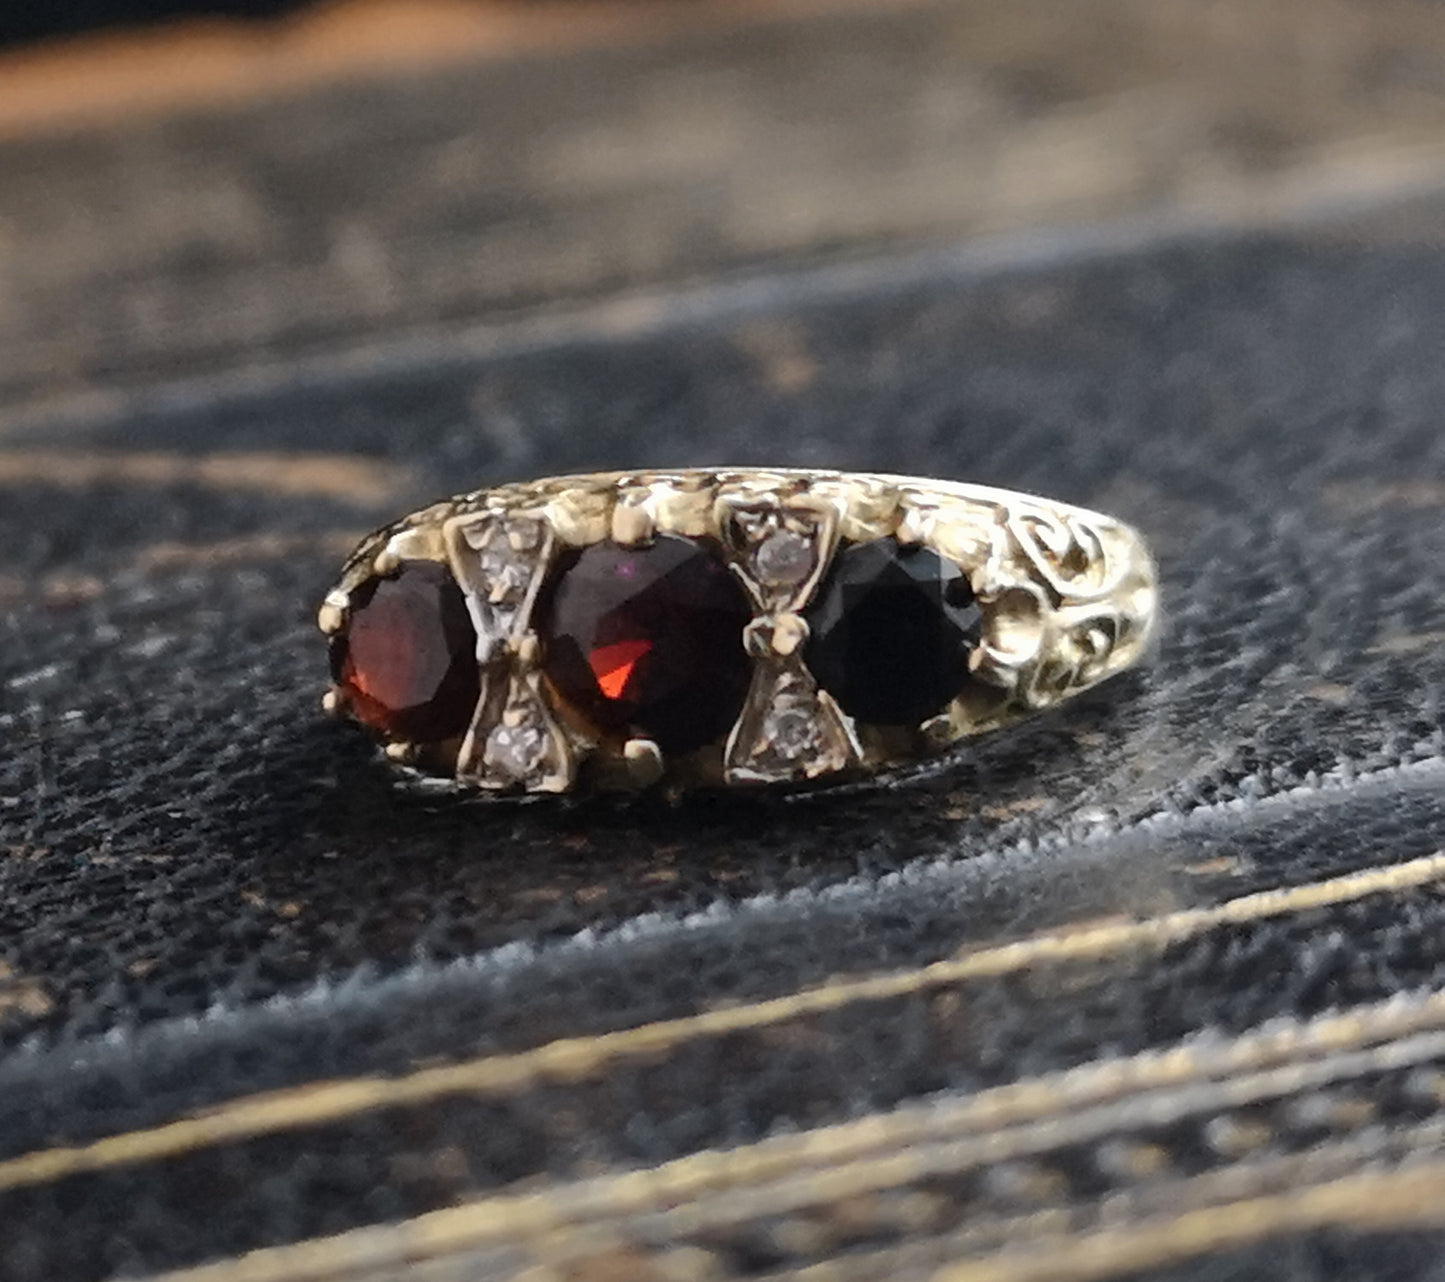 Vintage garnet and diamond ring, 9ct gold